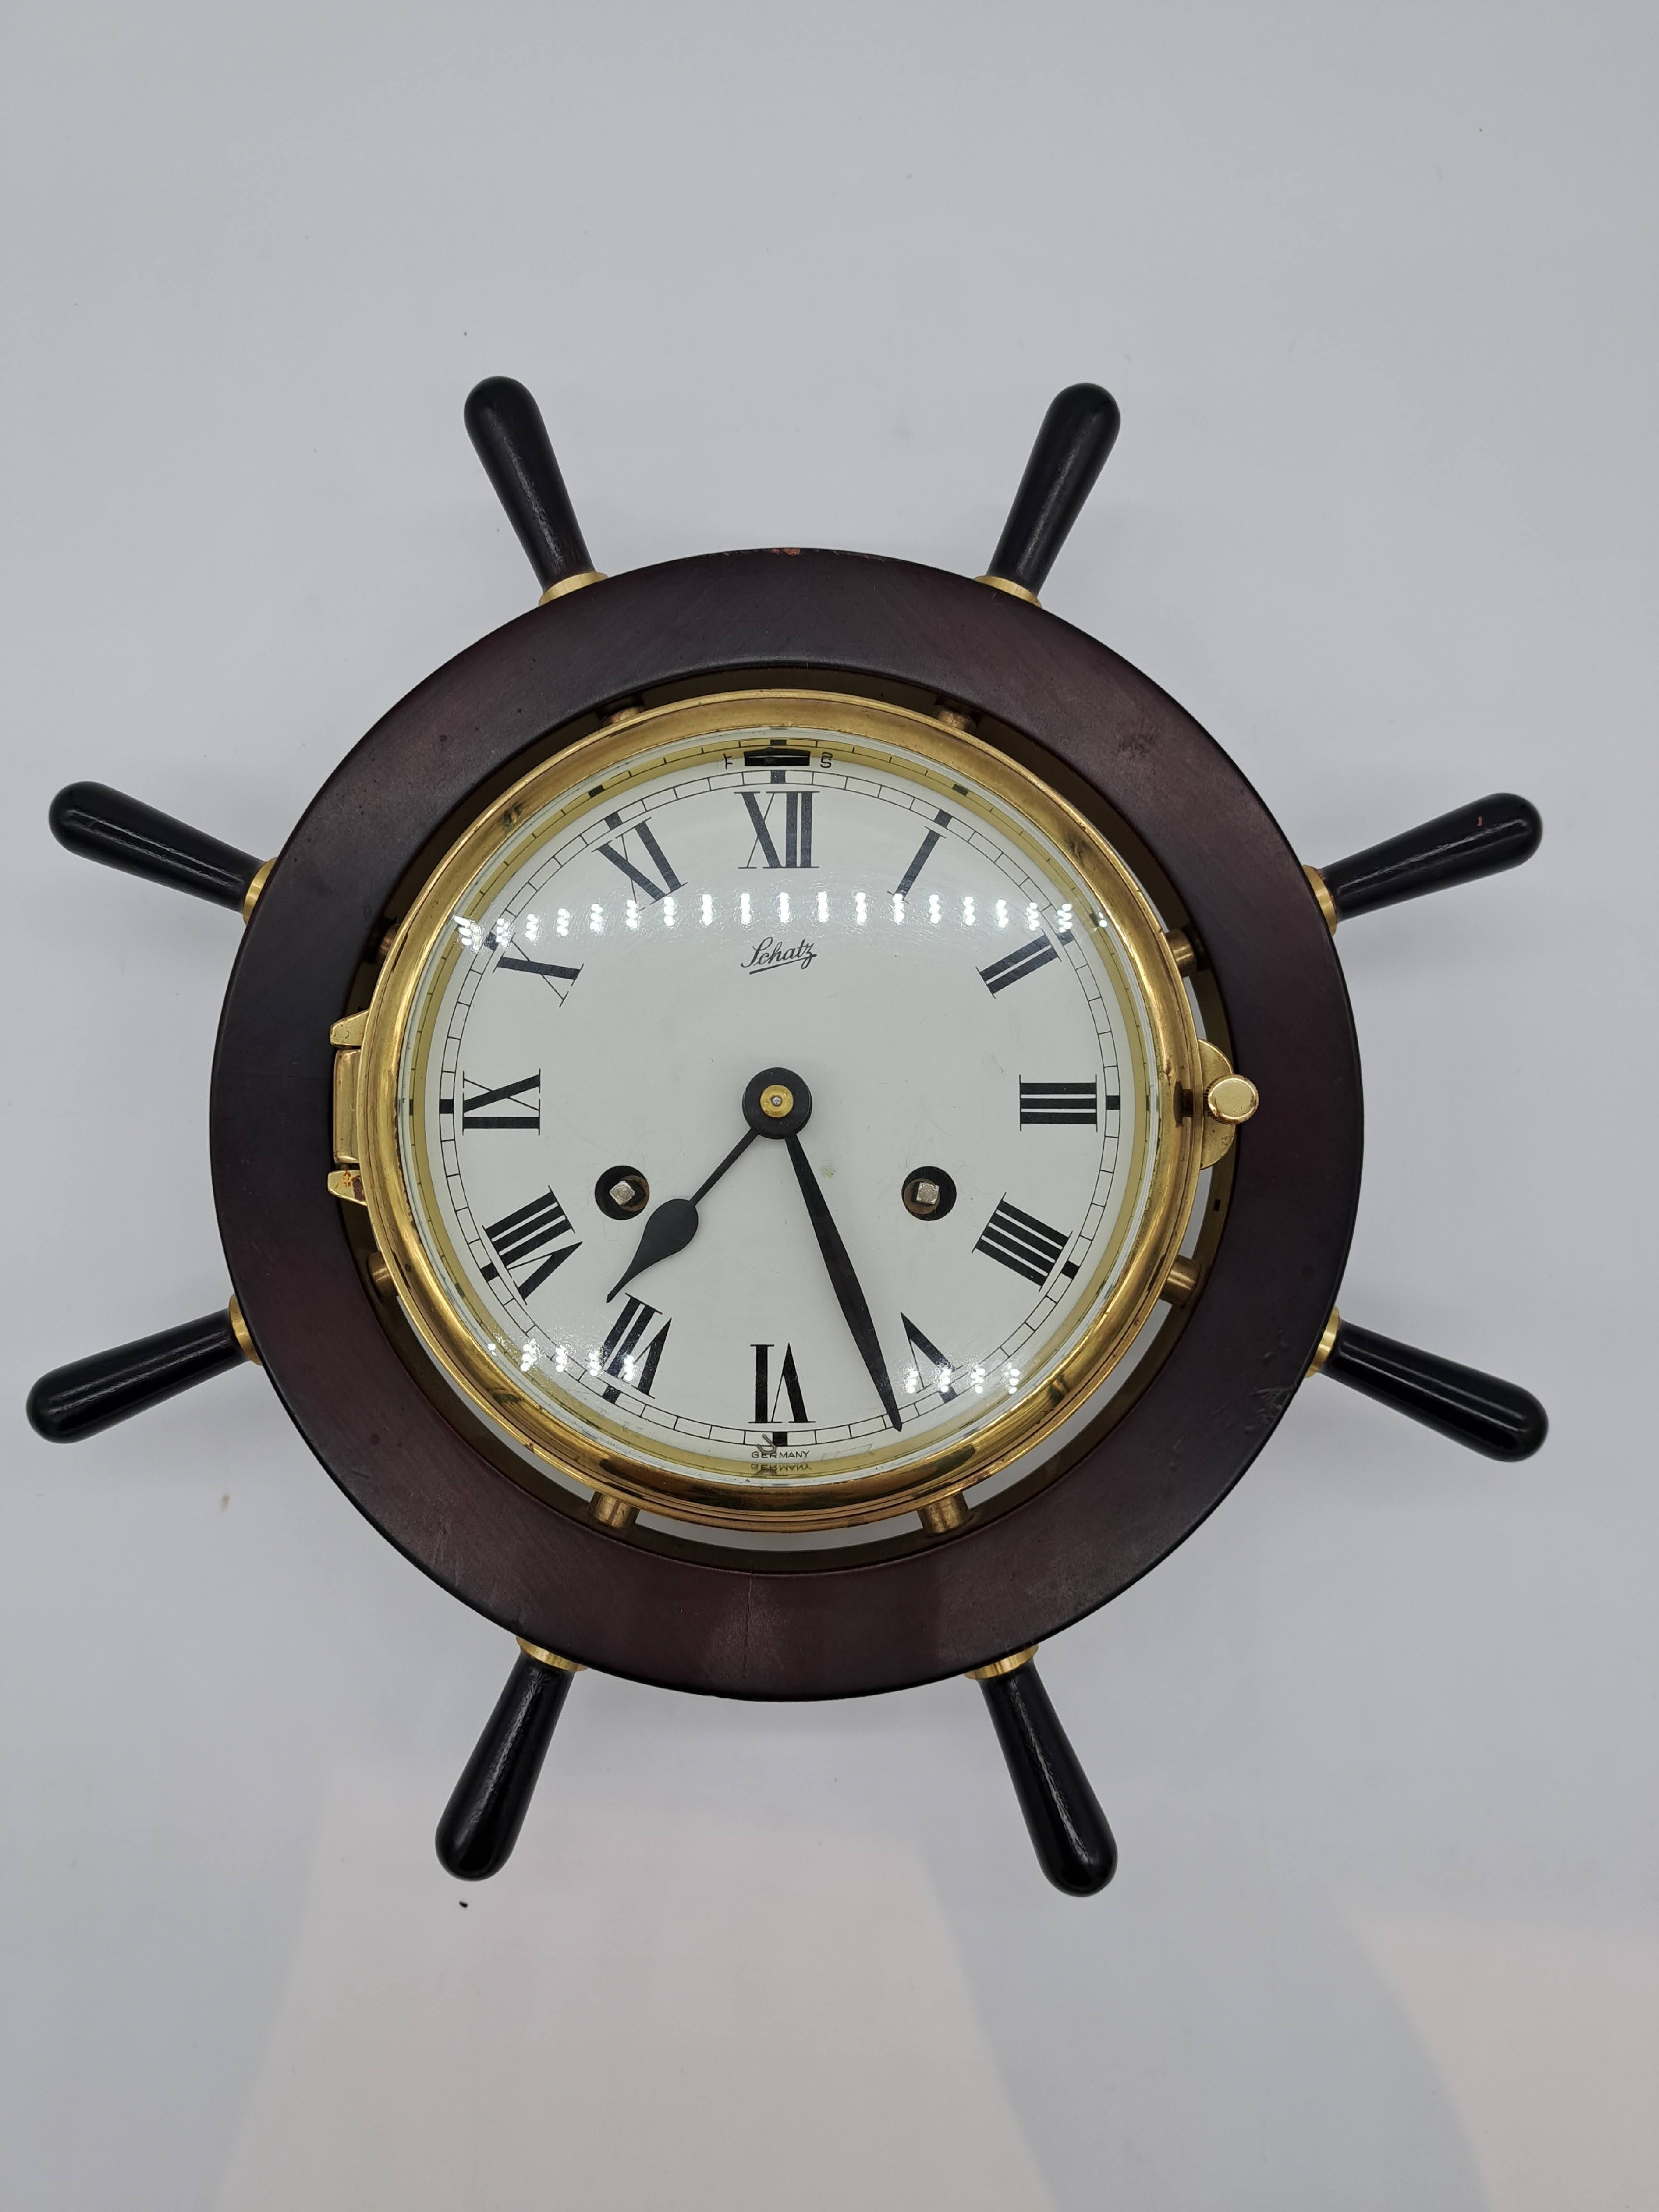 Schatz vintage quartz ship's clock.